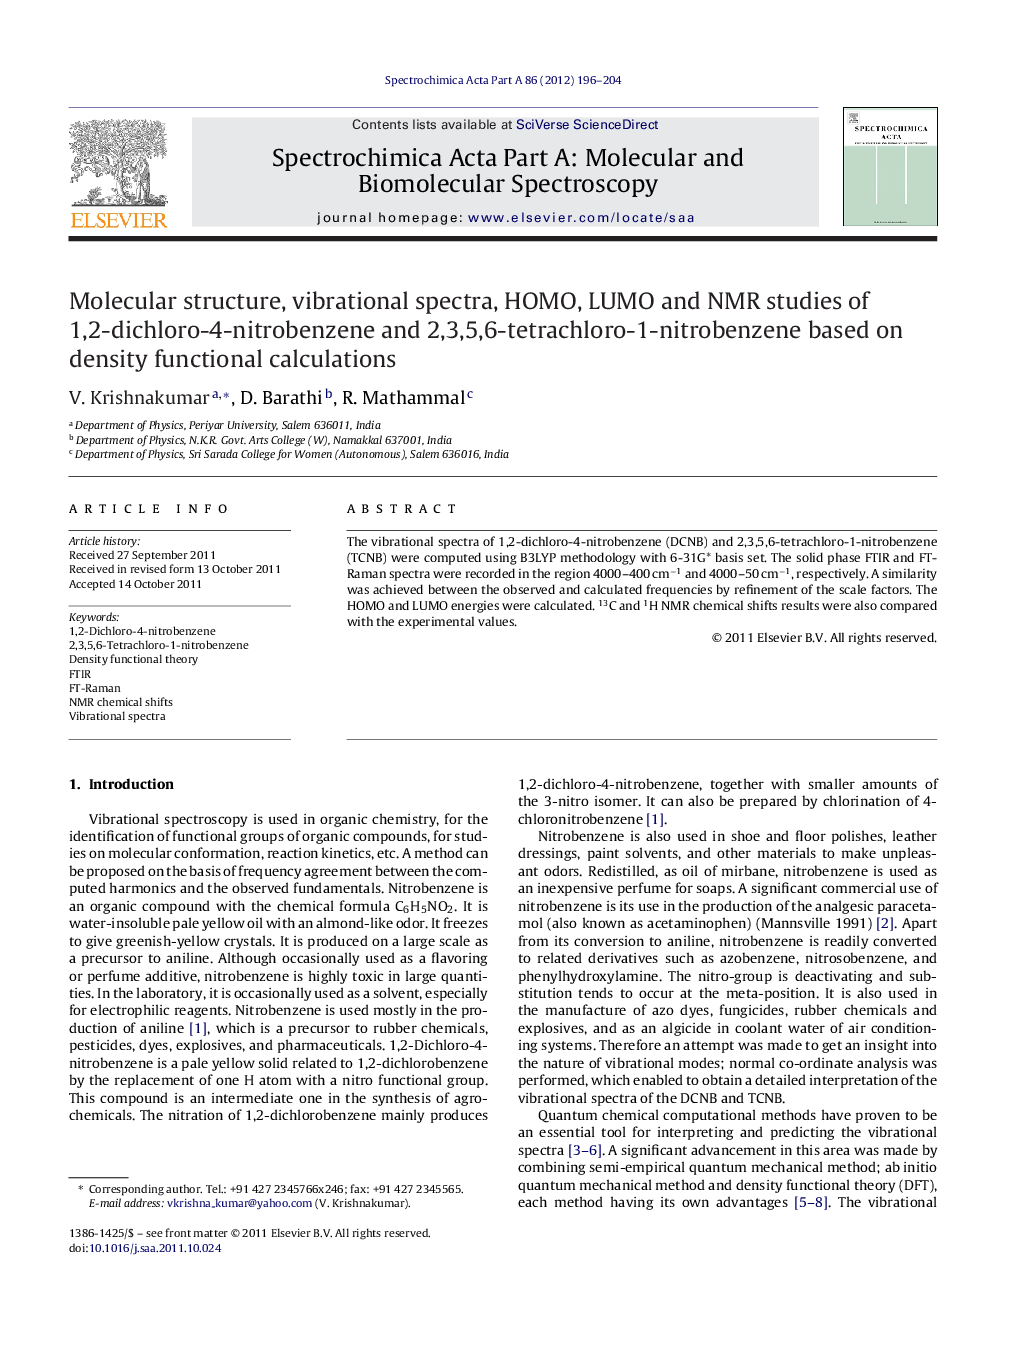 Molecular structure, vibrational spectra, HOMO, LUMO and NMR studies of 1,2-dichloro-4-nitrobenzene and 2,3,5,6-tetrachloro-1-nitrobenzene based on density functional calculations